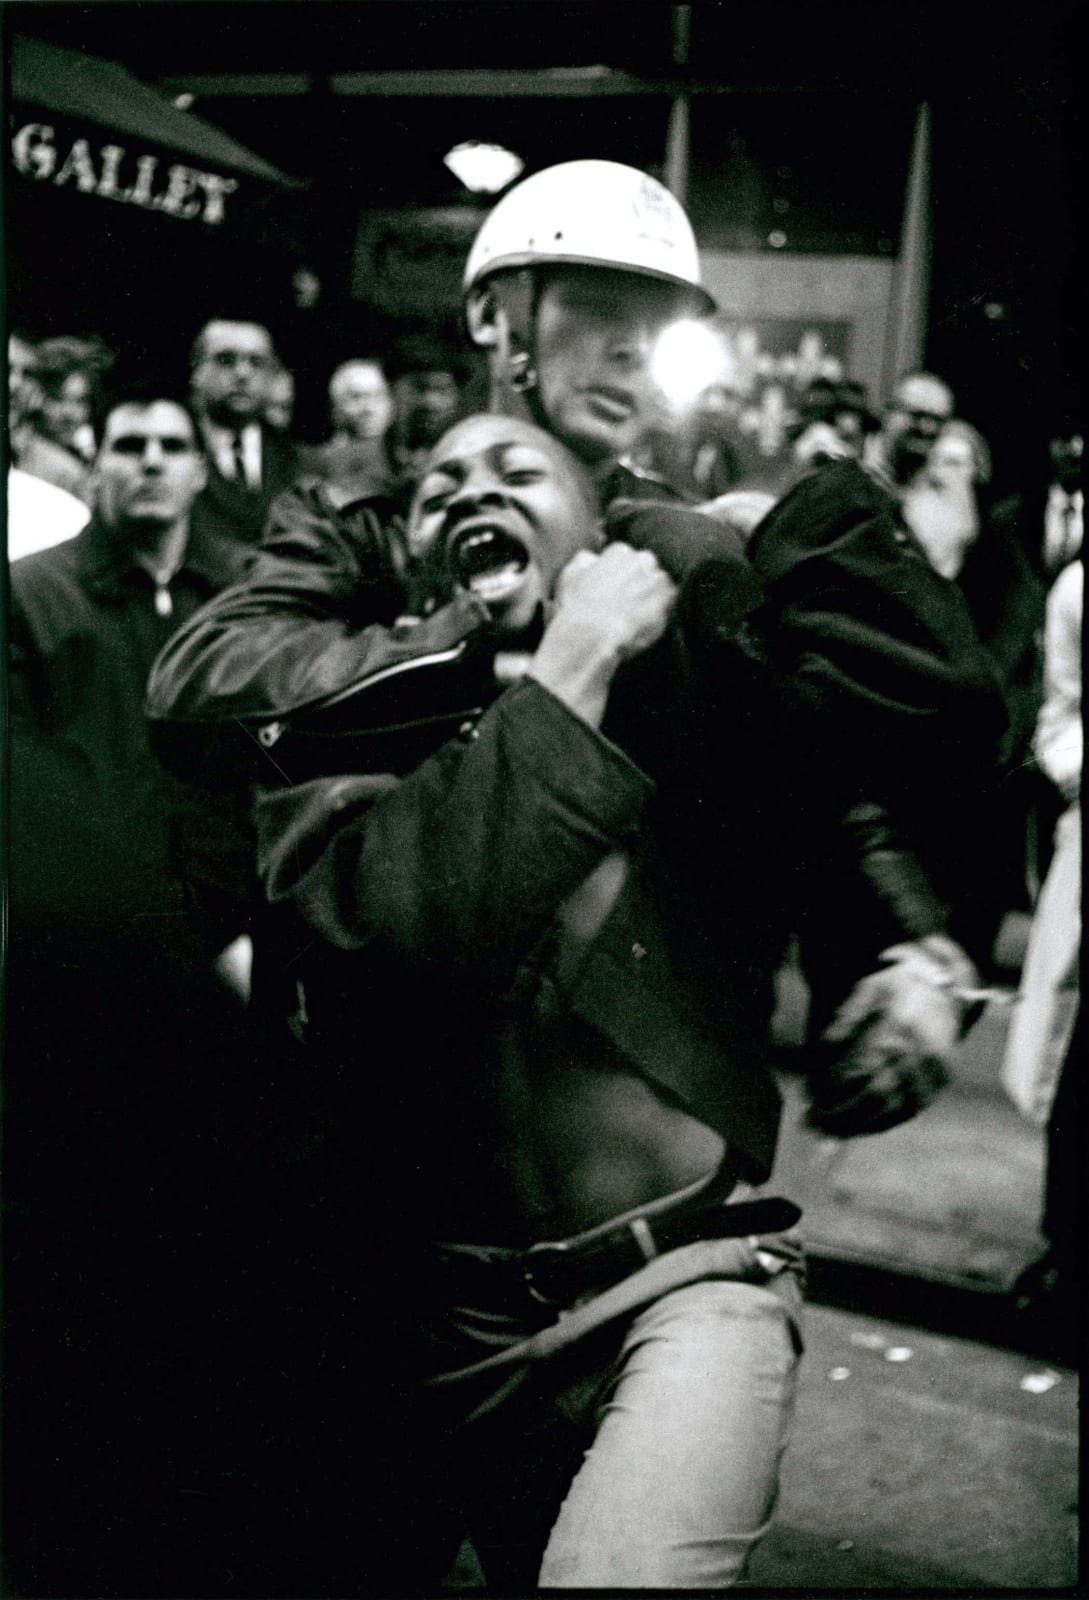 Danny Lyon, The arrest of Taylor Washington, Lebs Restaurant, Atlanta, 1963